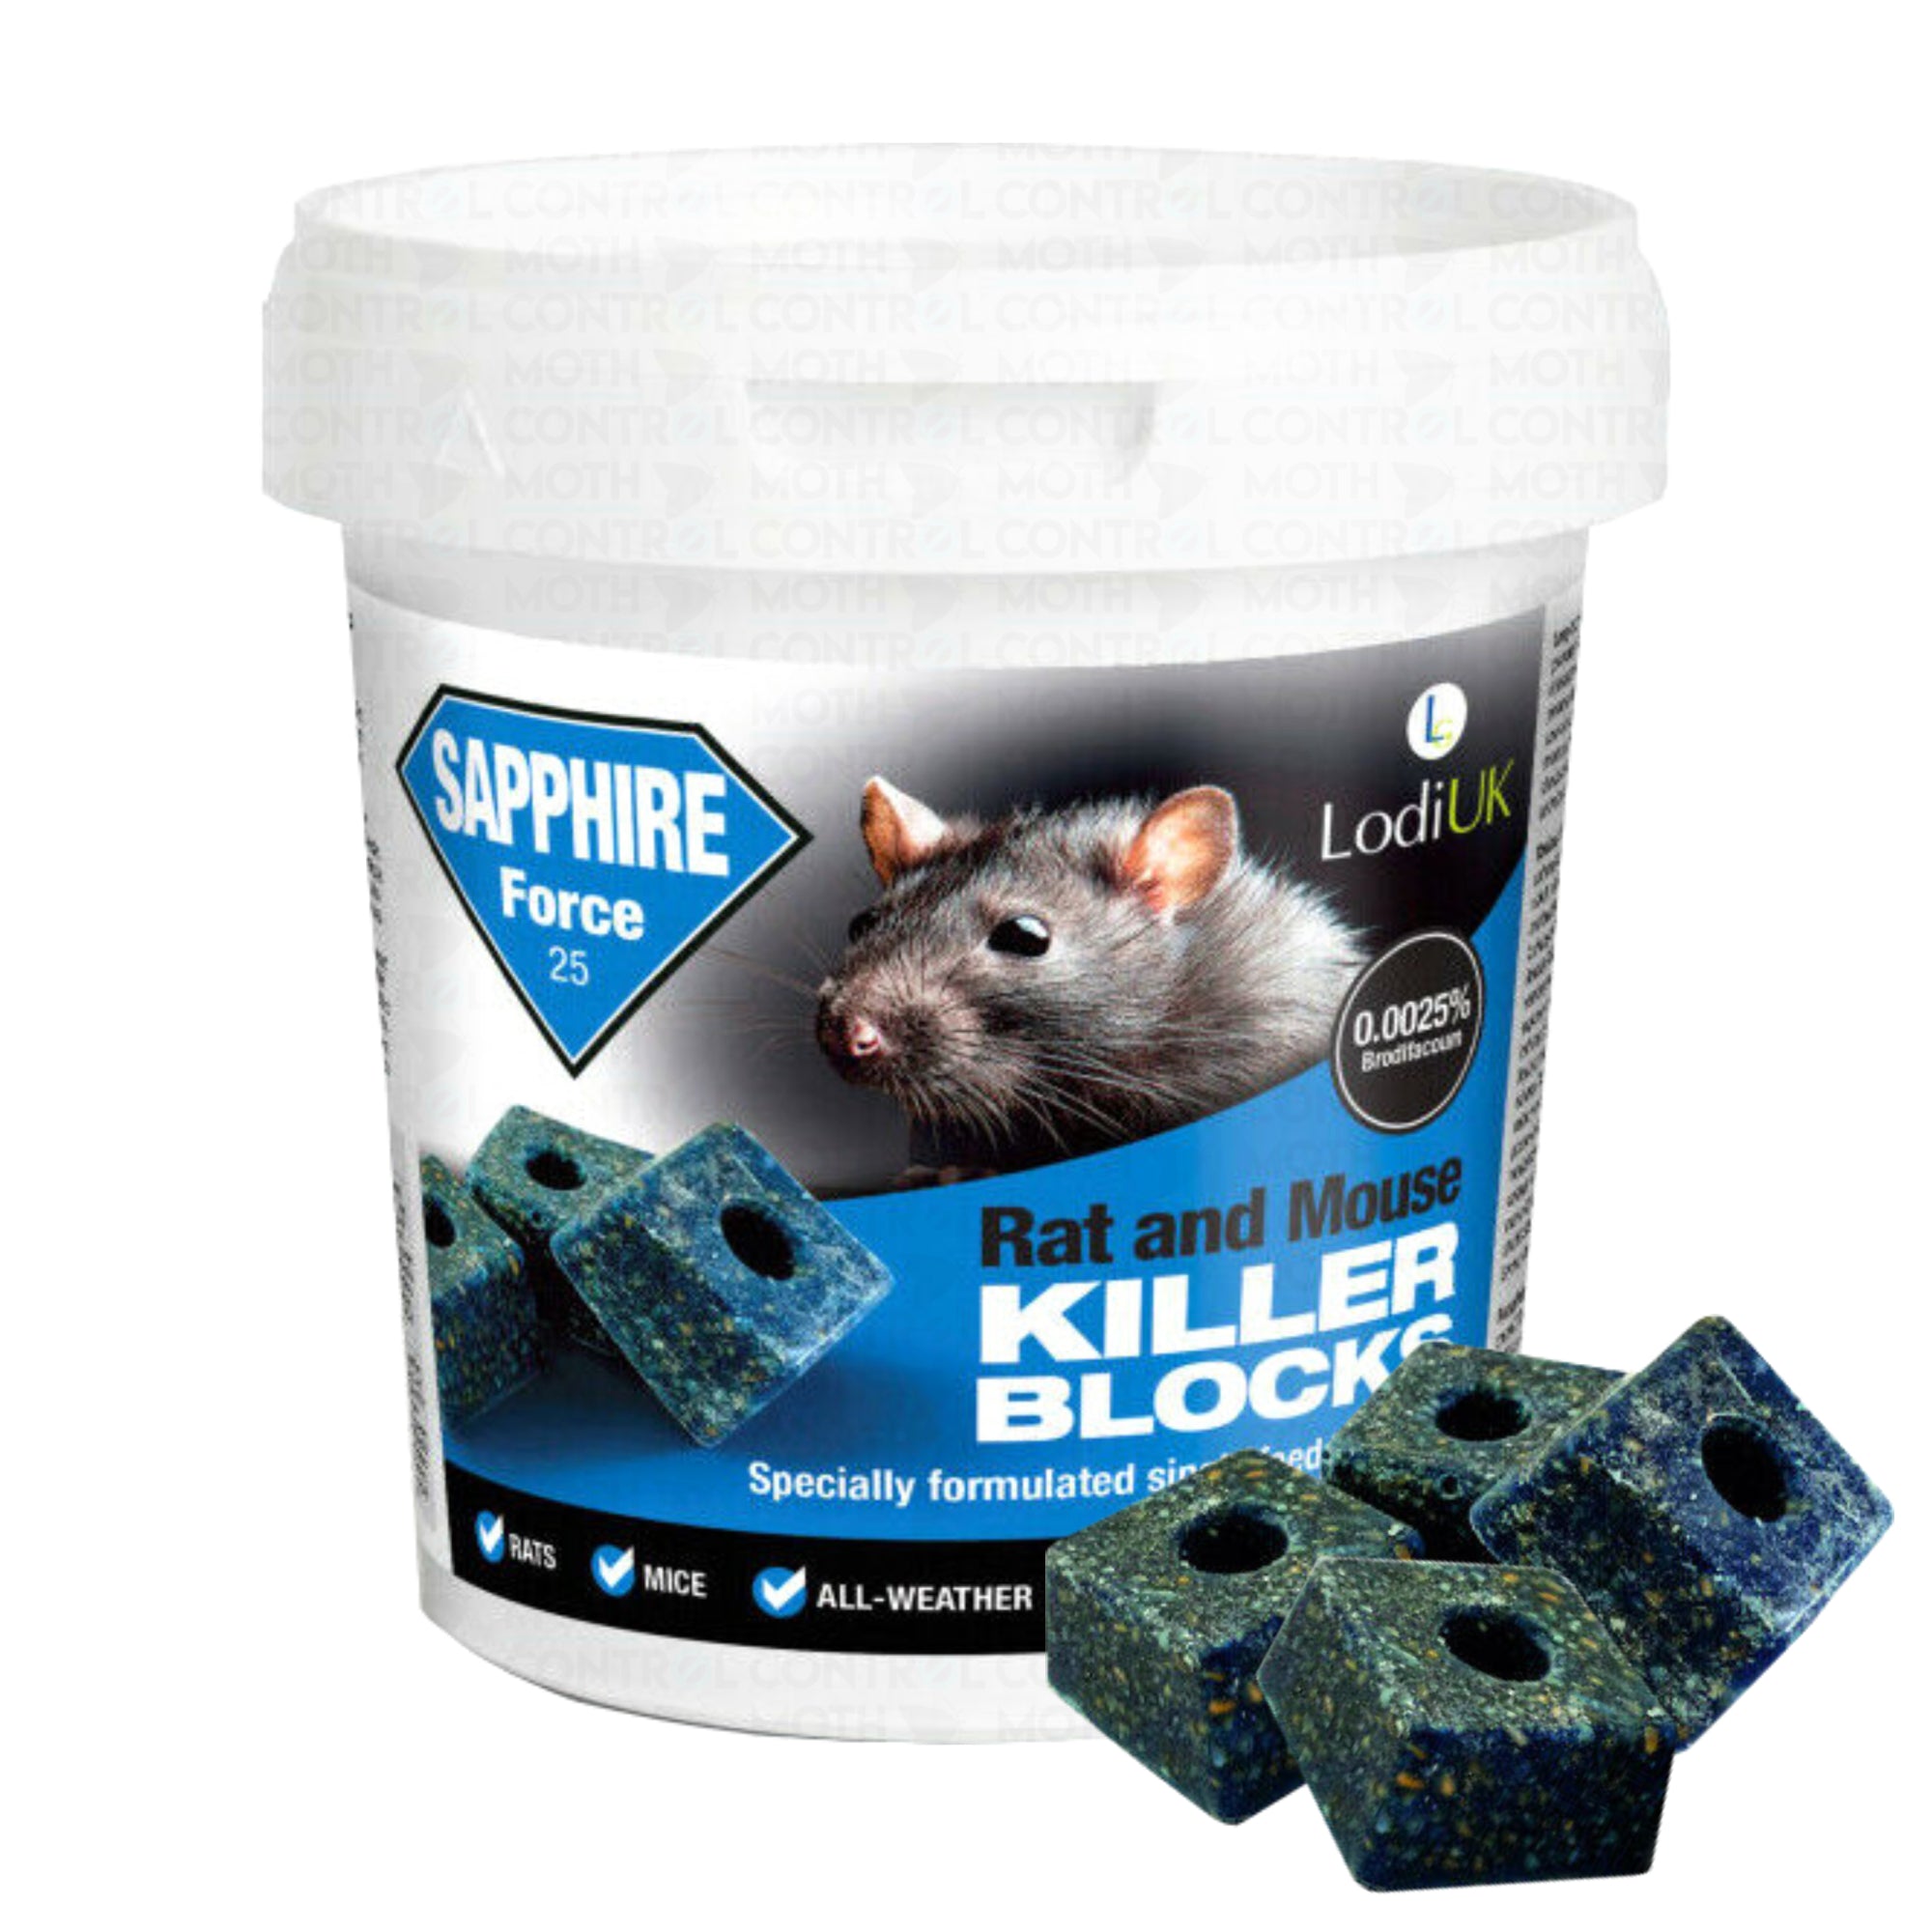 Advanced Rat Killer Poison Bait Blocks Single Feed Max Strength 300g + 1 Professional Tampered Proof Rat Bait Box - Moth Control